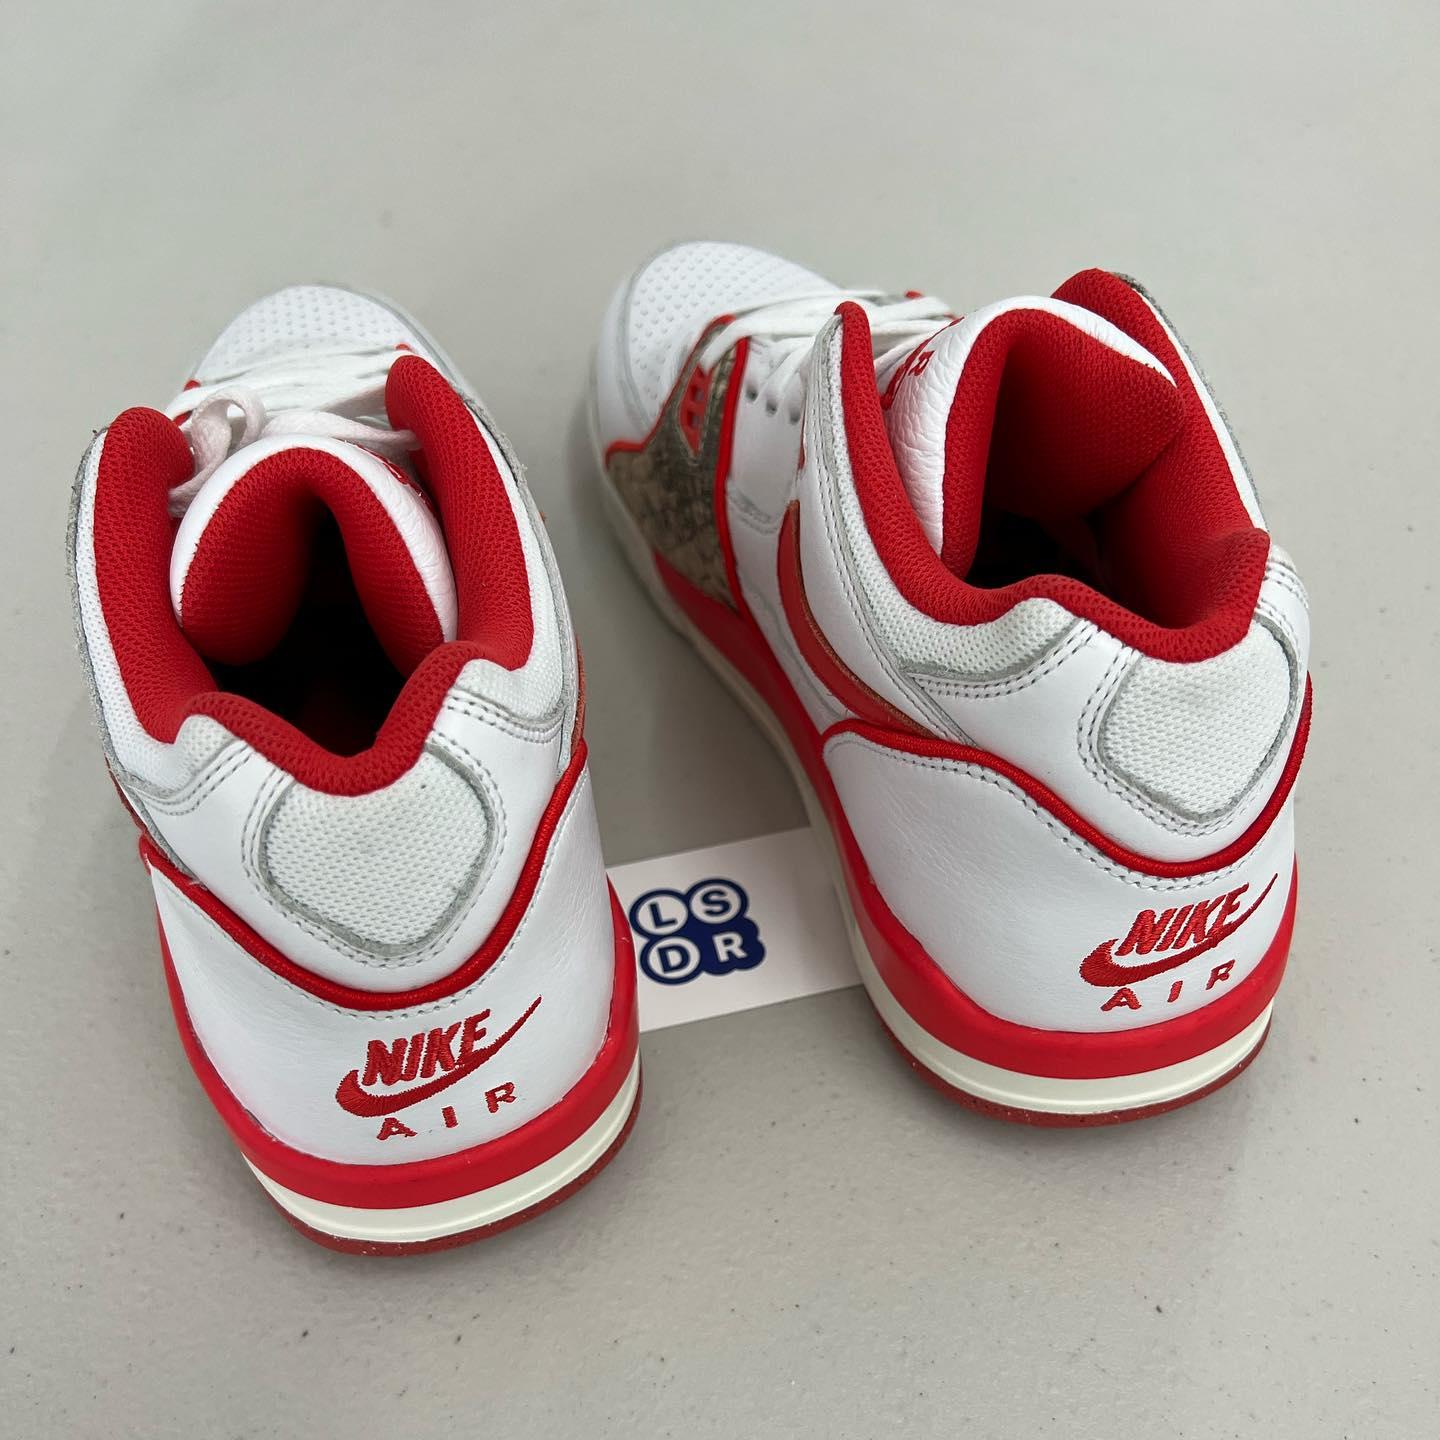 Stüssy x Nike Air Flight 89 'White/Red' heel